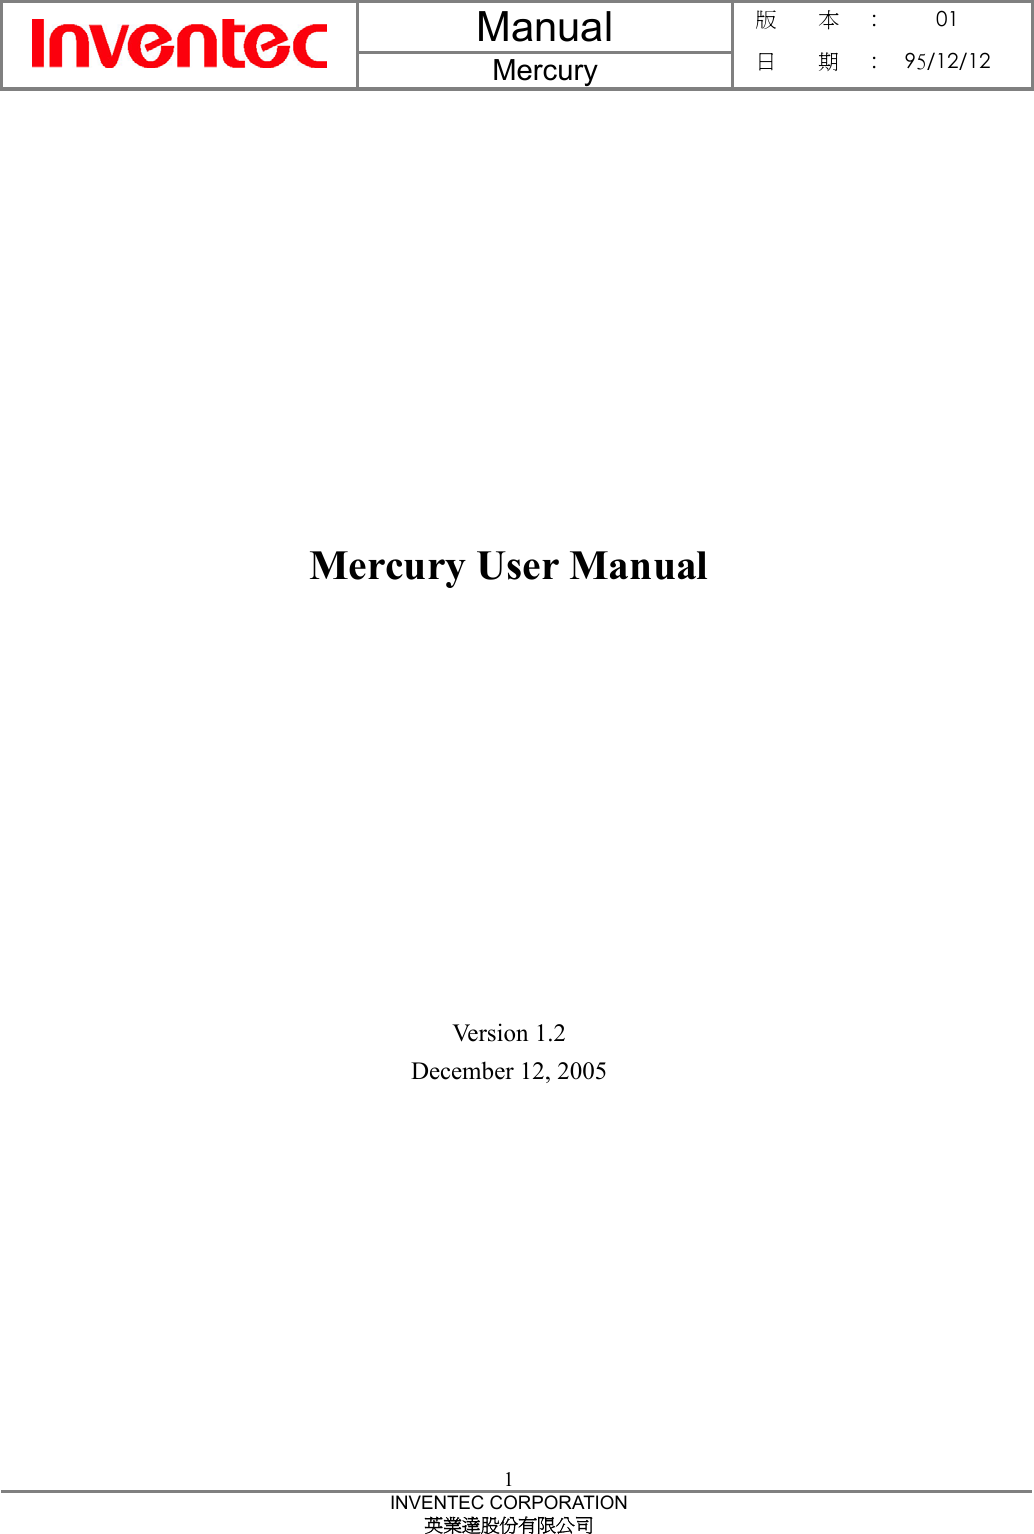 Manual  Mercury 版    本 :  01 日    期 : 95/12/12  1 INVENTEC CORPORATION 英業達股份有限公司             Mercury User Manual            Version 1.2 December 12, 2005 